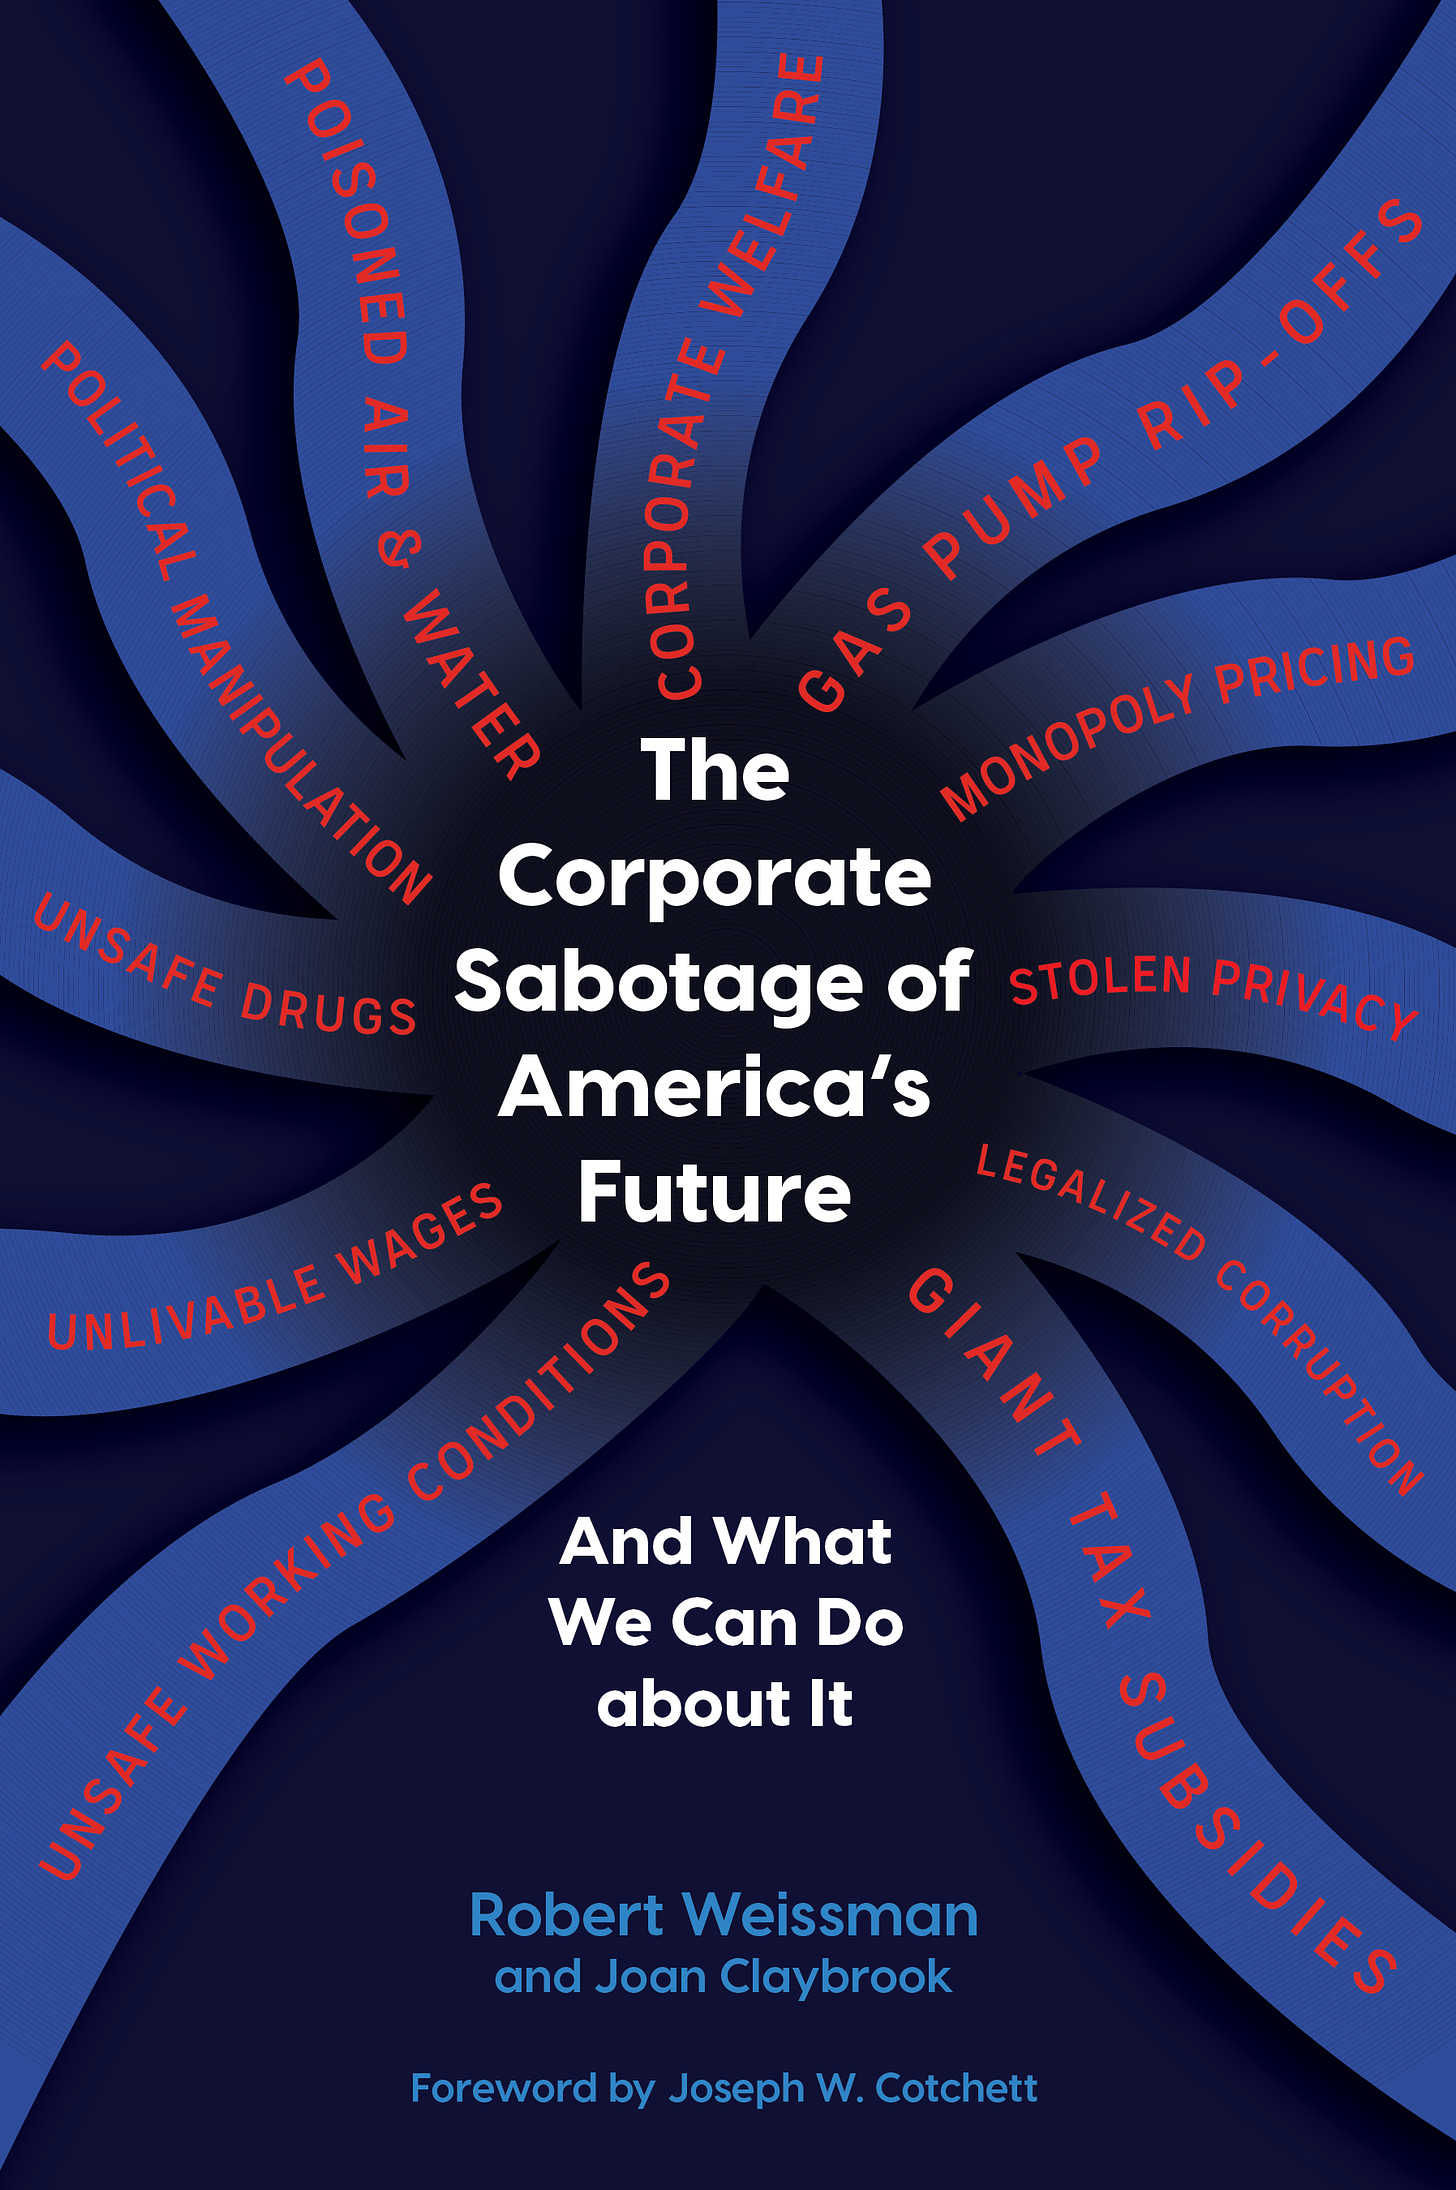 The Corporate Sabotage of America's Future - Public Citizen